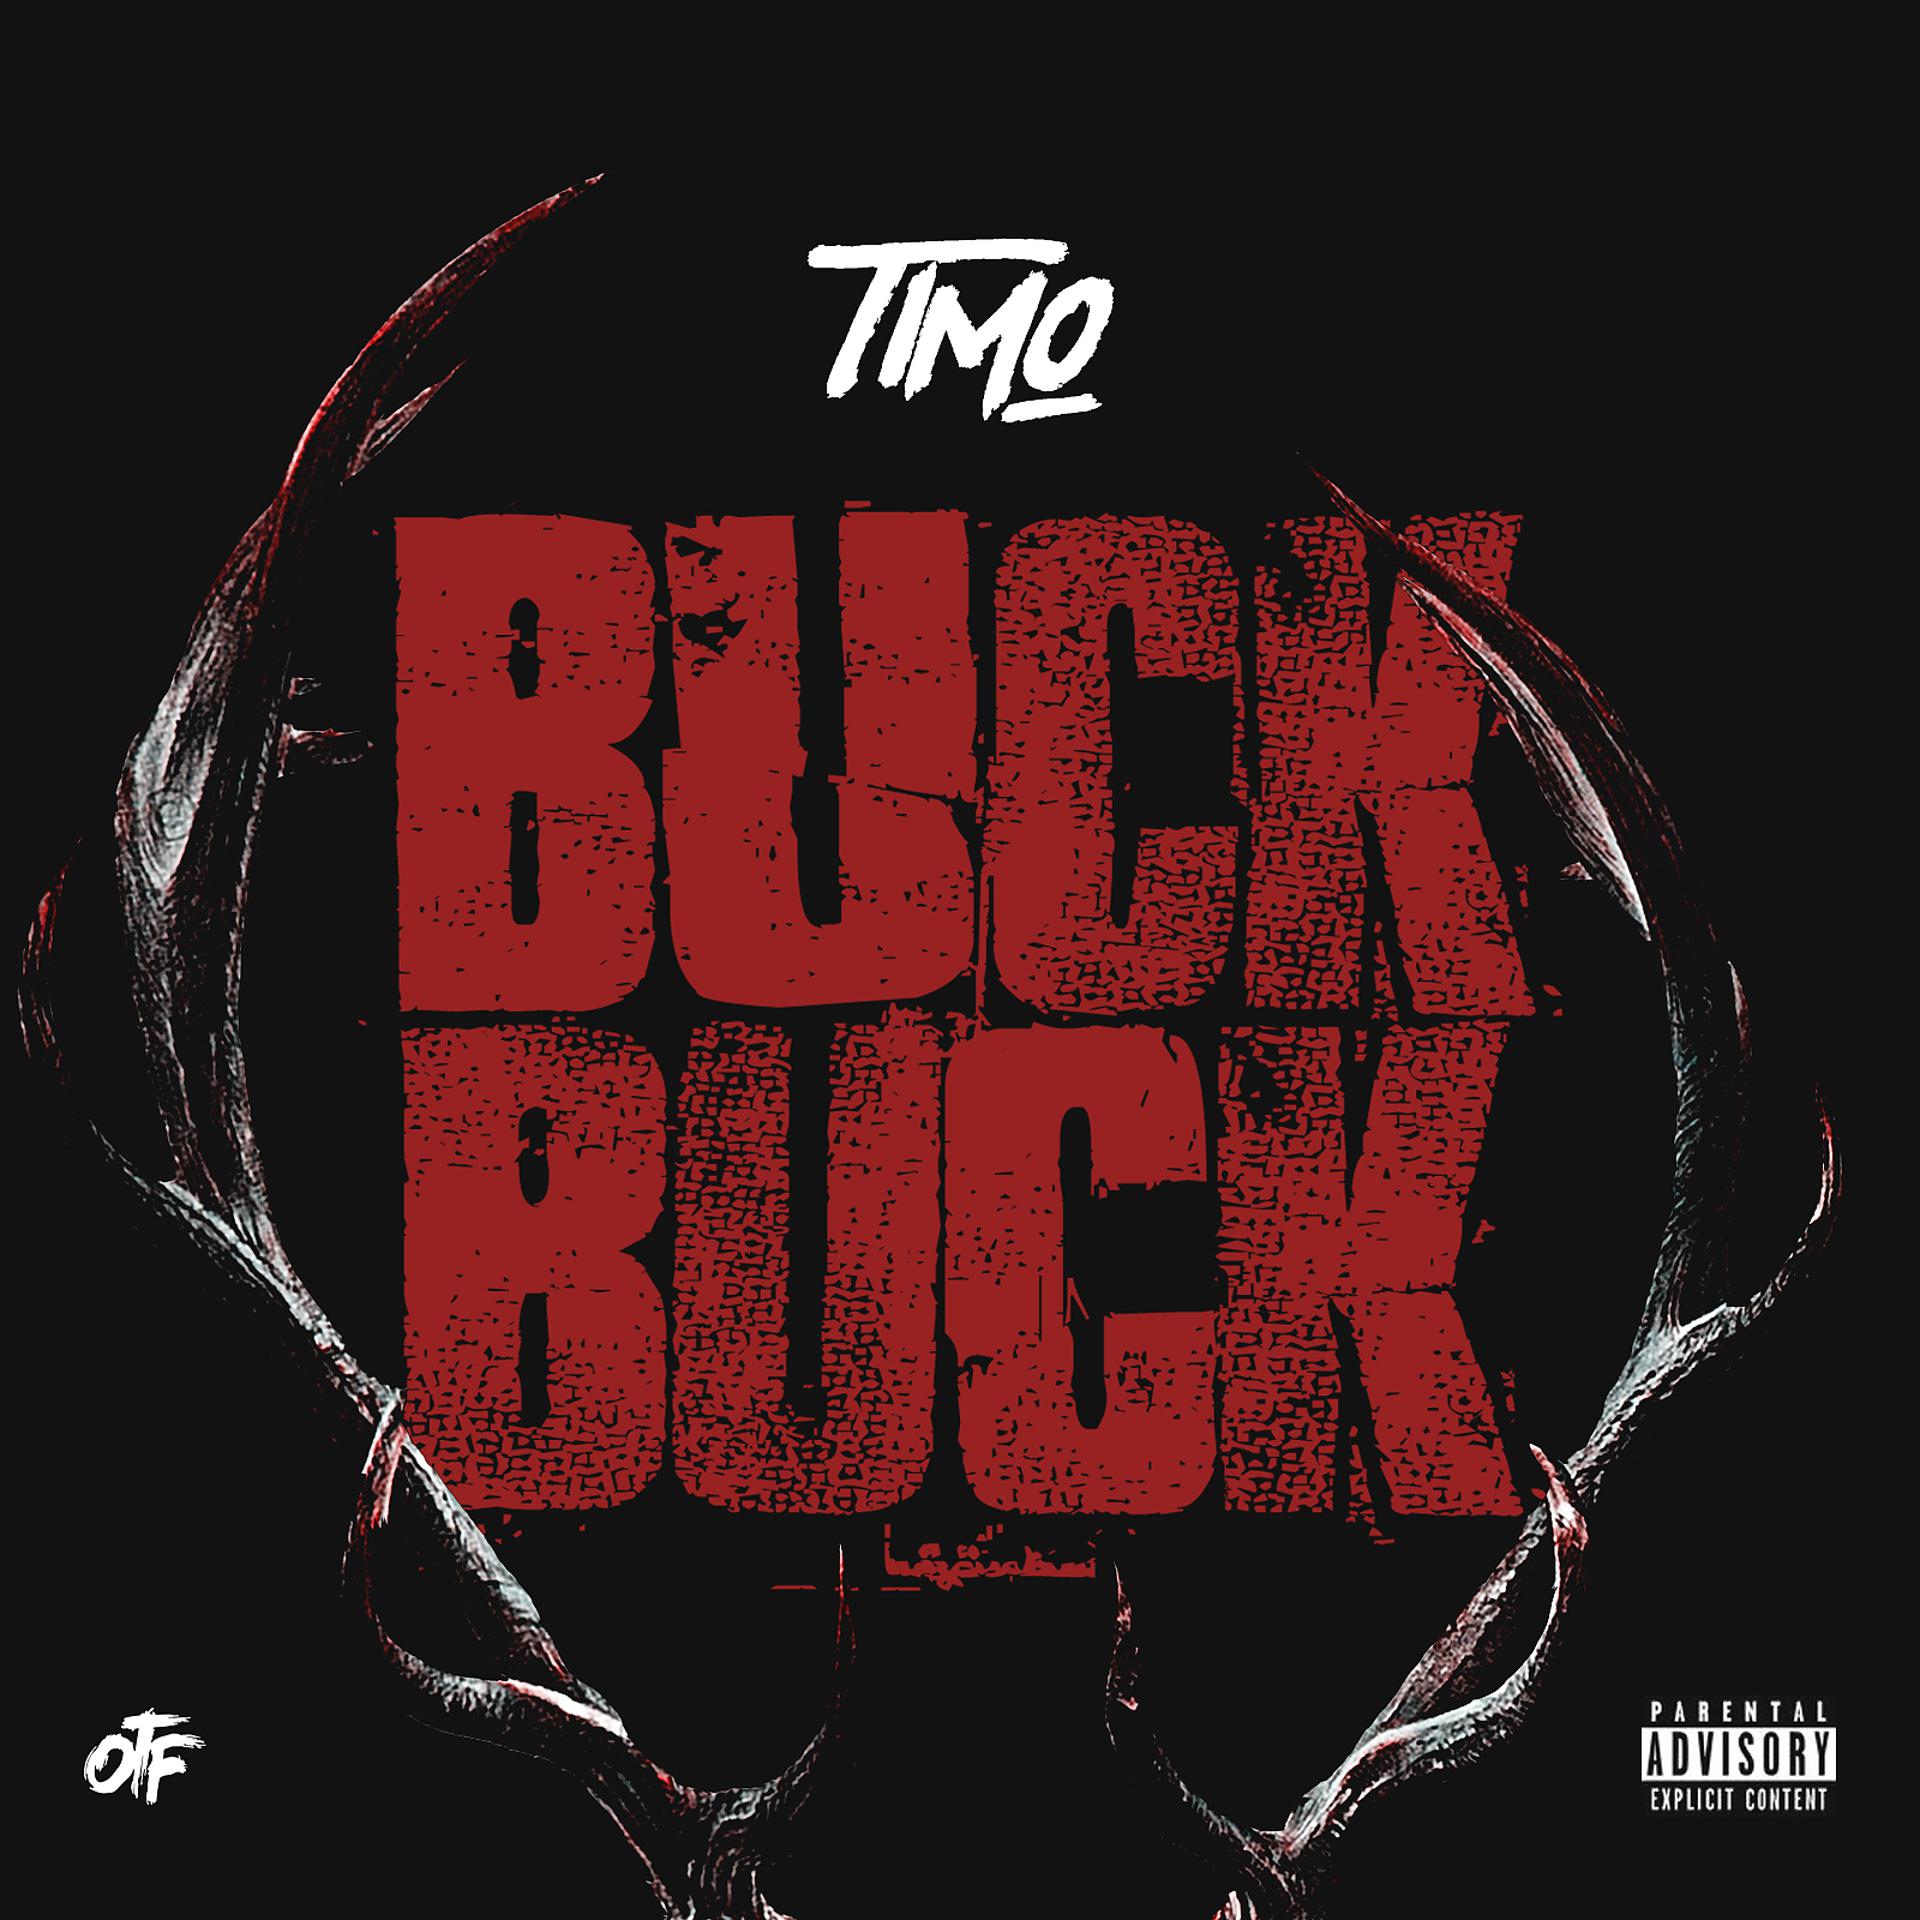 Постер альбома Buck Buck